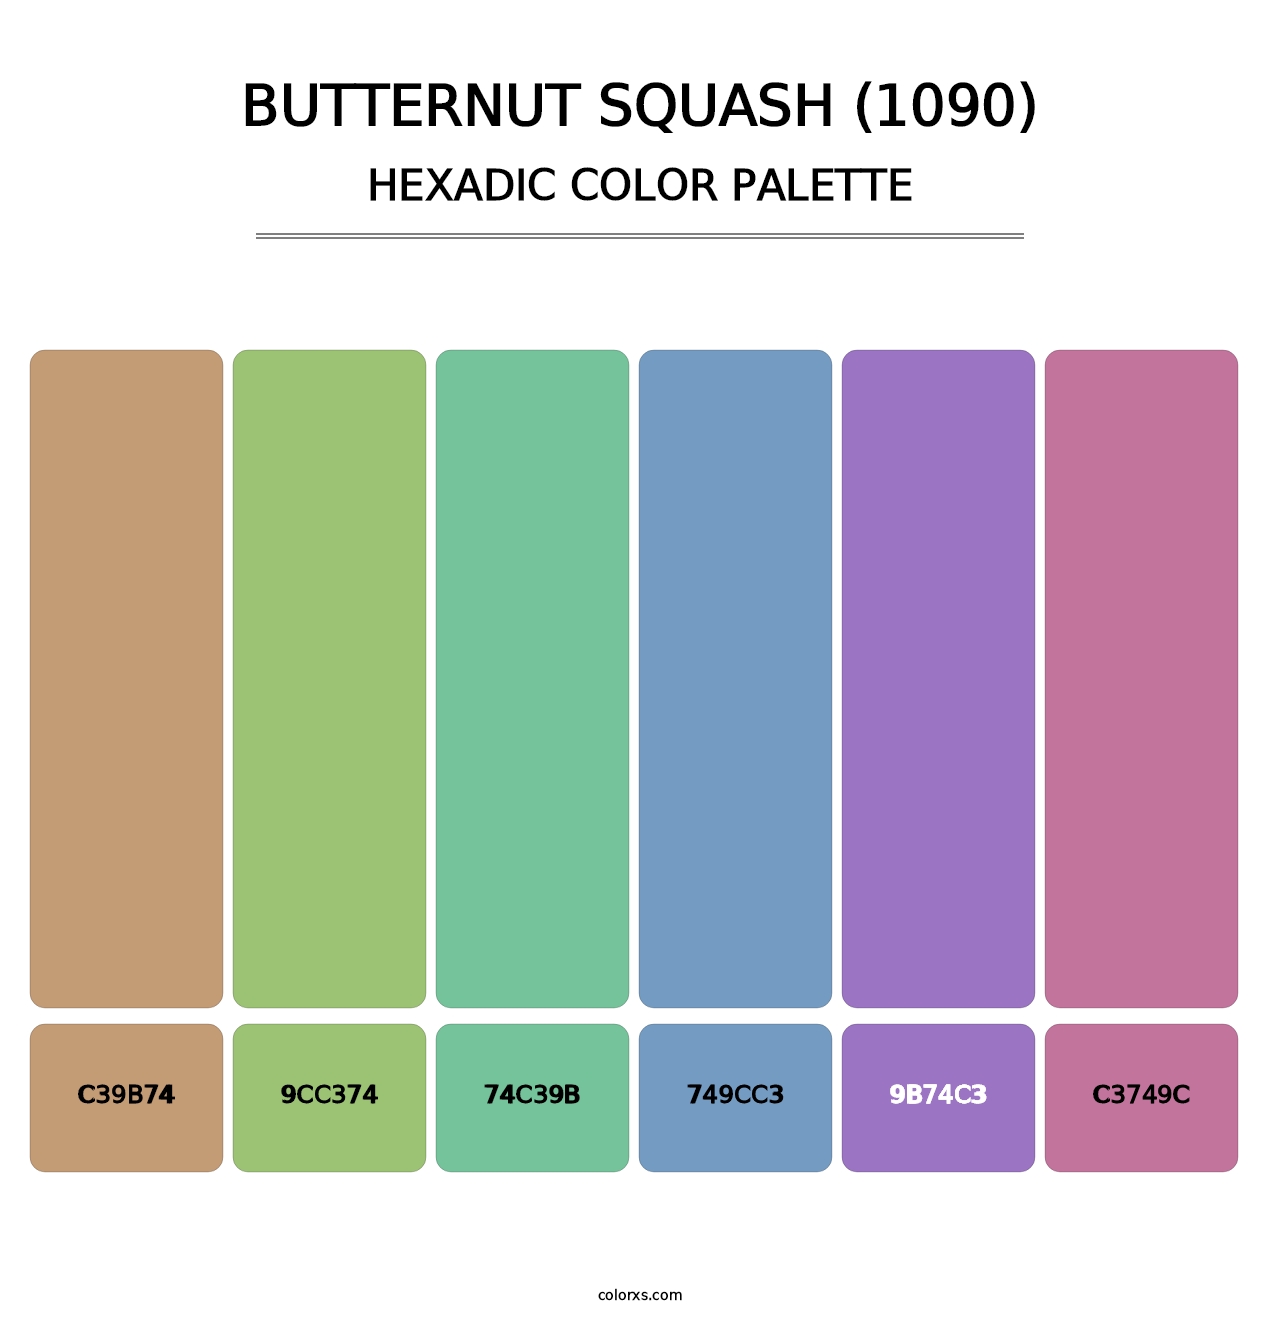 Butternut Squash (1090) - Hexadic Color Palette